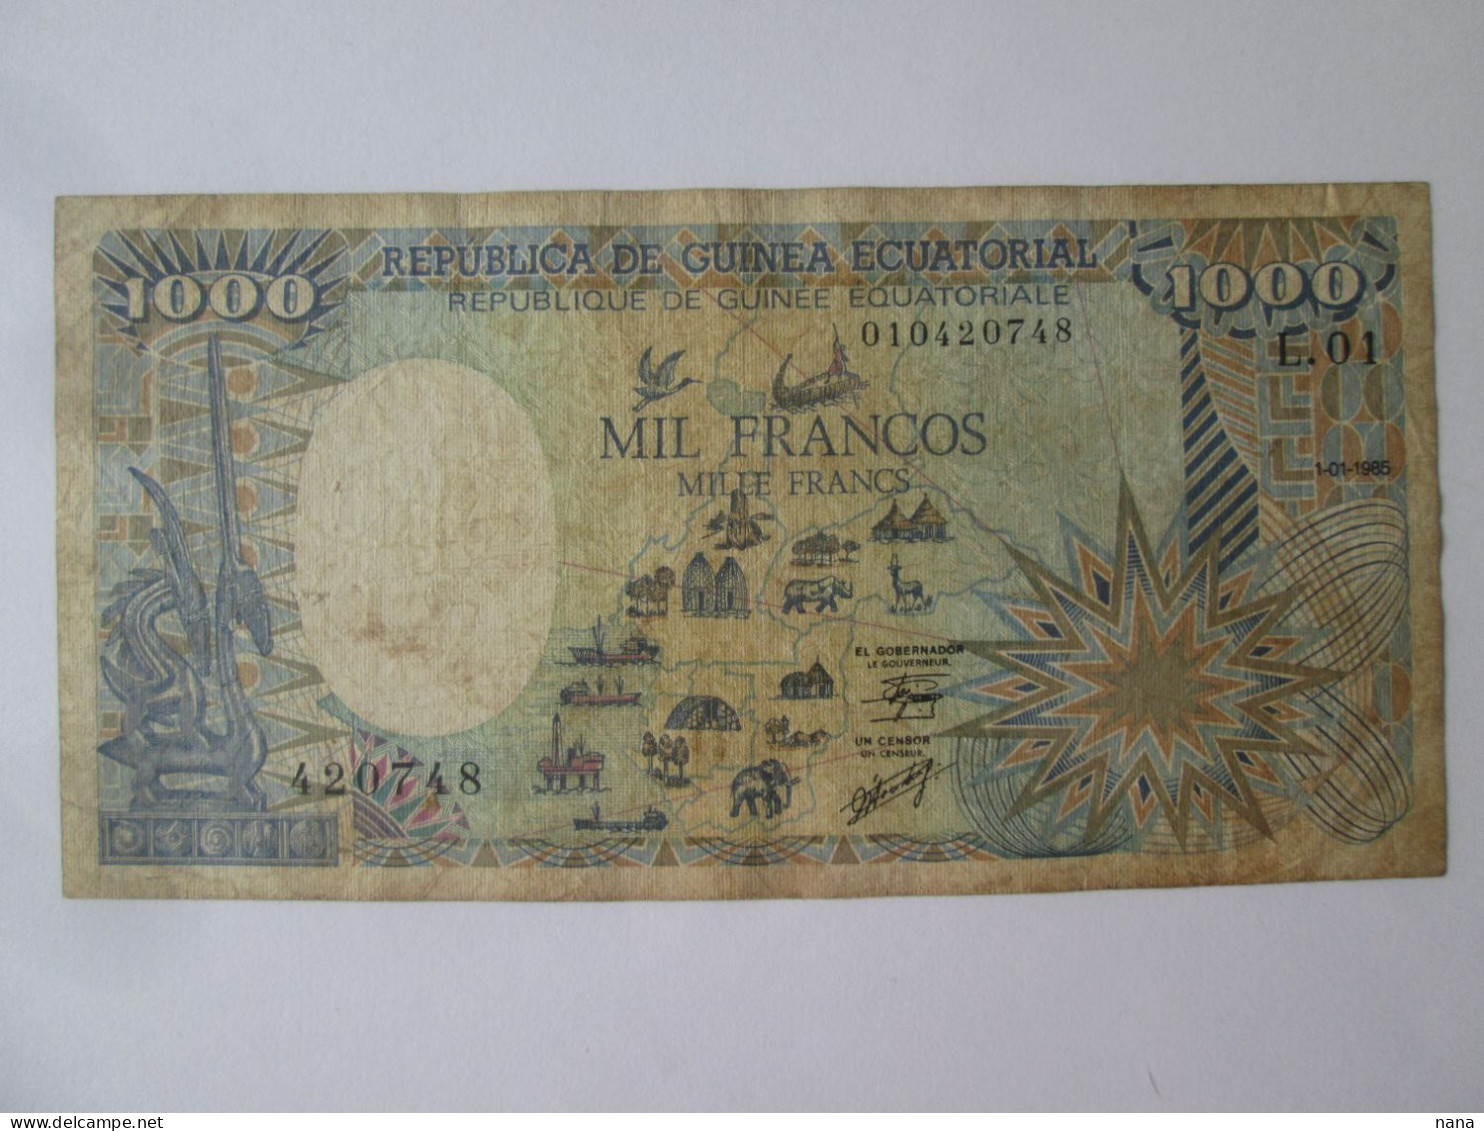 Rare! Equatorial Guinea 1000 Francs 1985 Banknote,see Pictures - Guinea Equatoriale